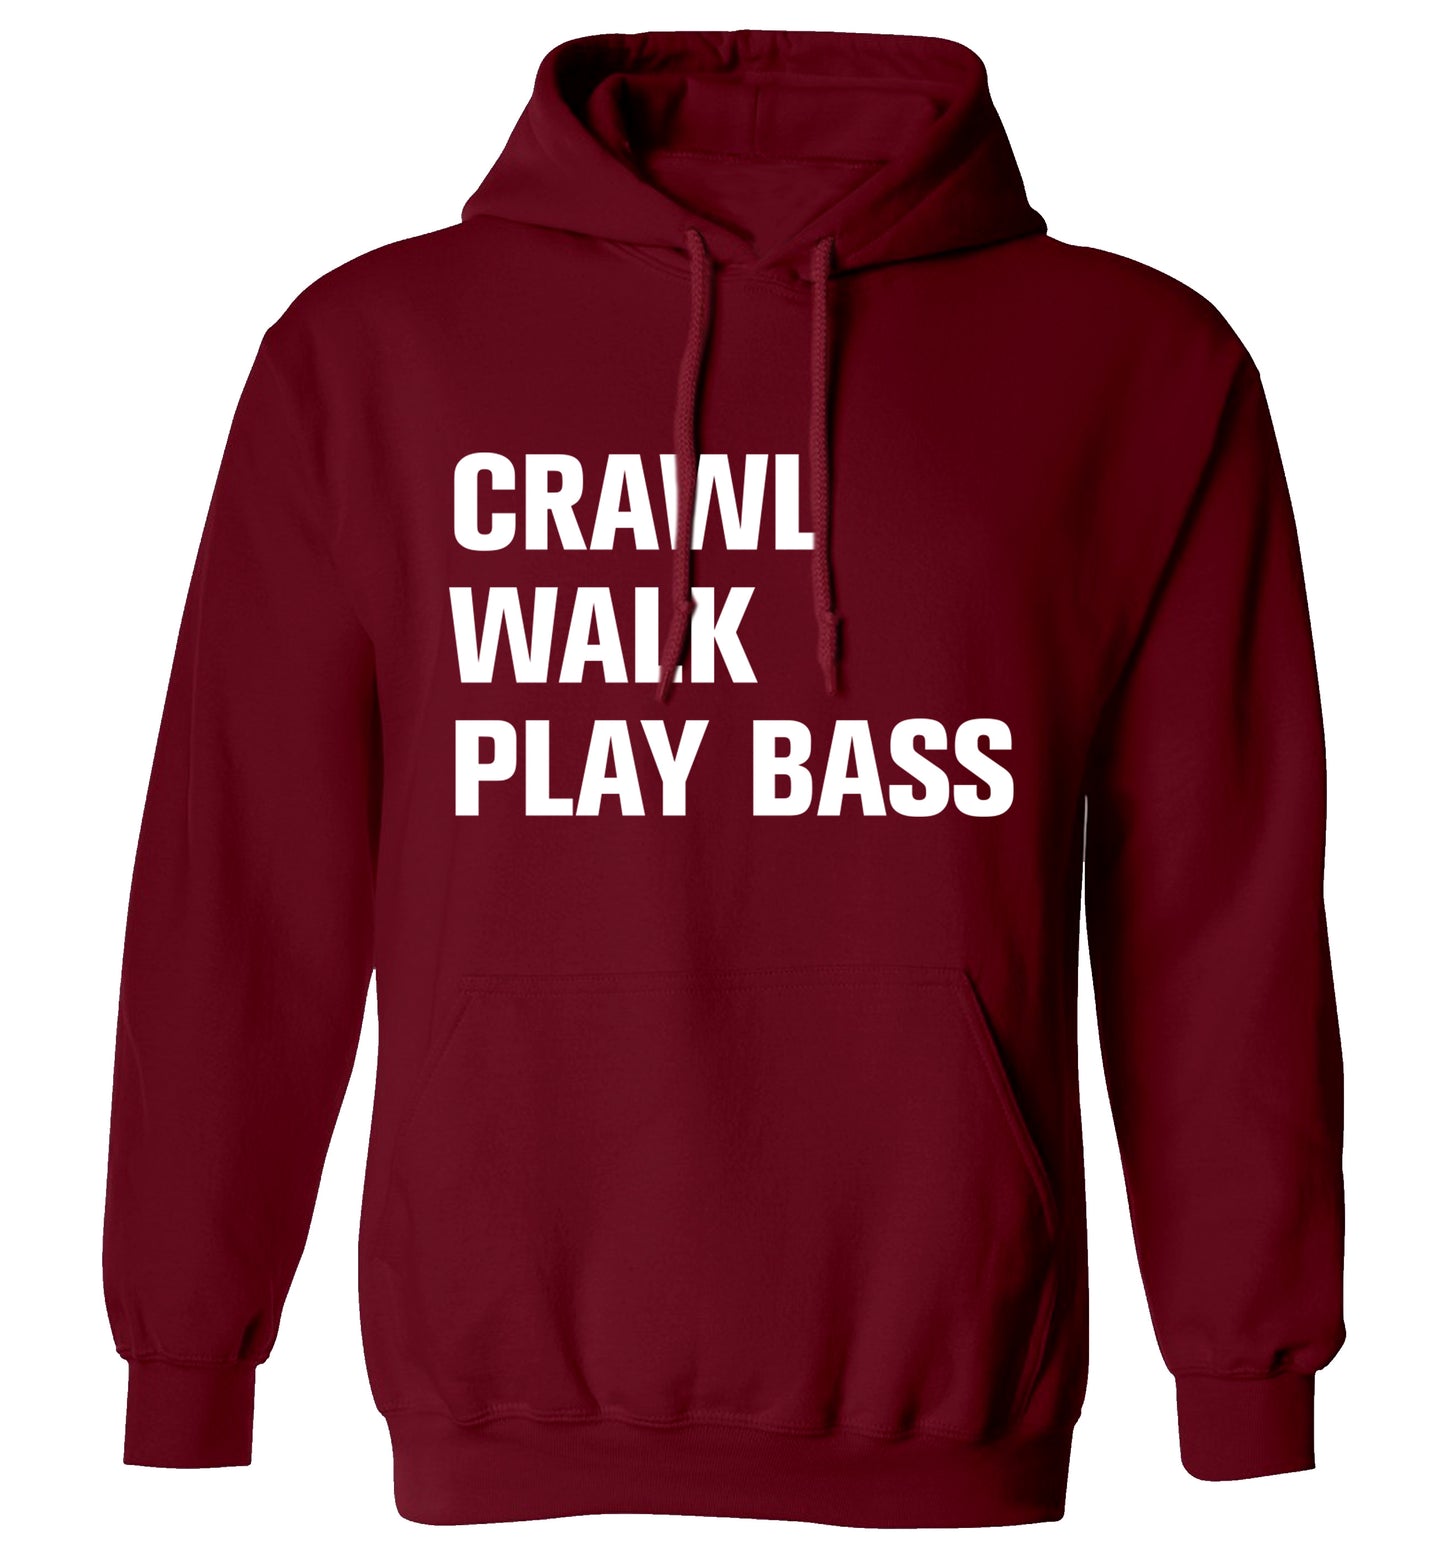 Crawl Walk Play Bass adults unisex maroon hoodie 2XL